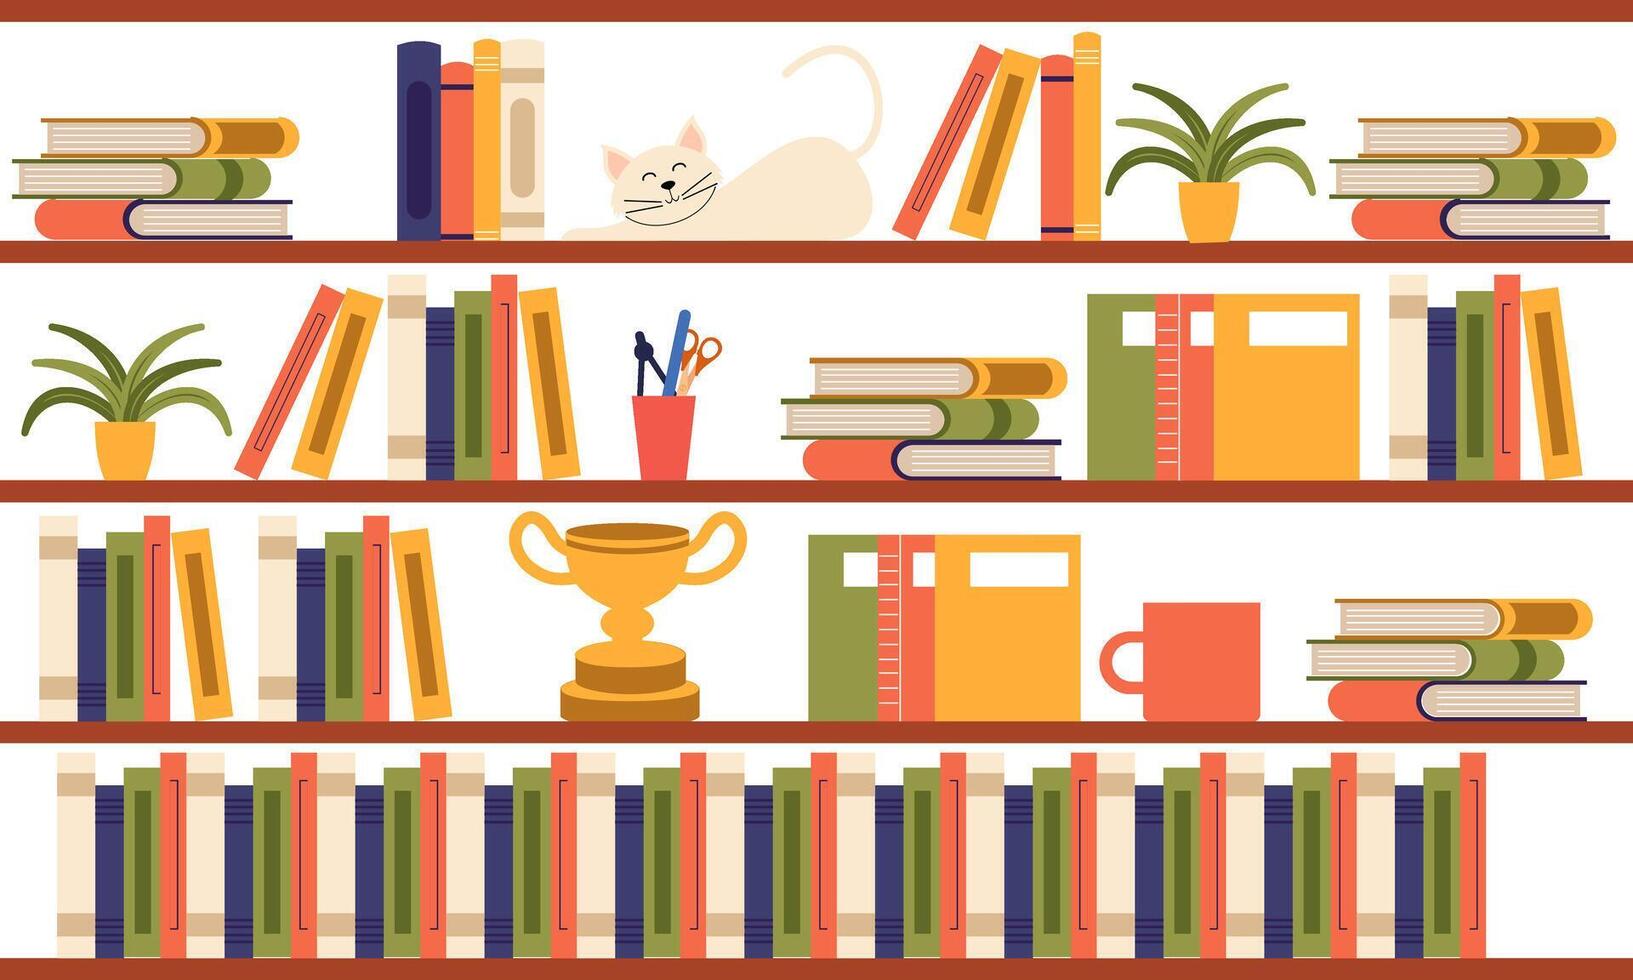 Bookshelf concept illustration for book festival and fair vector